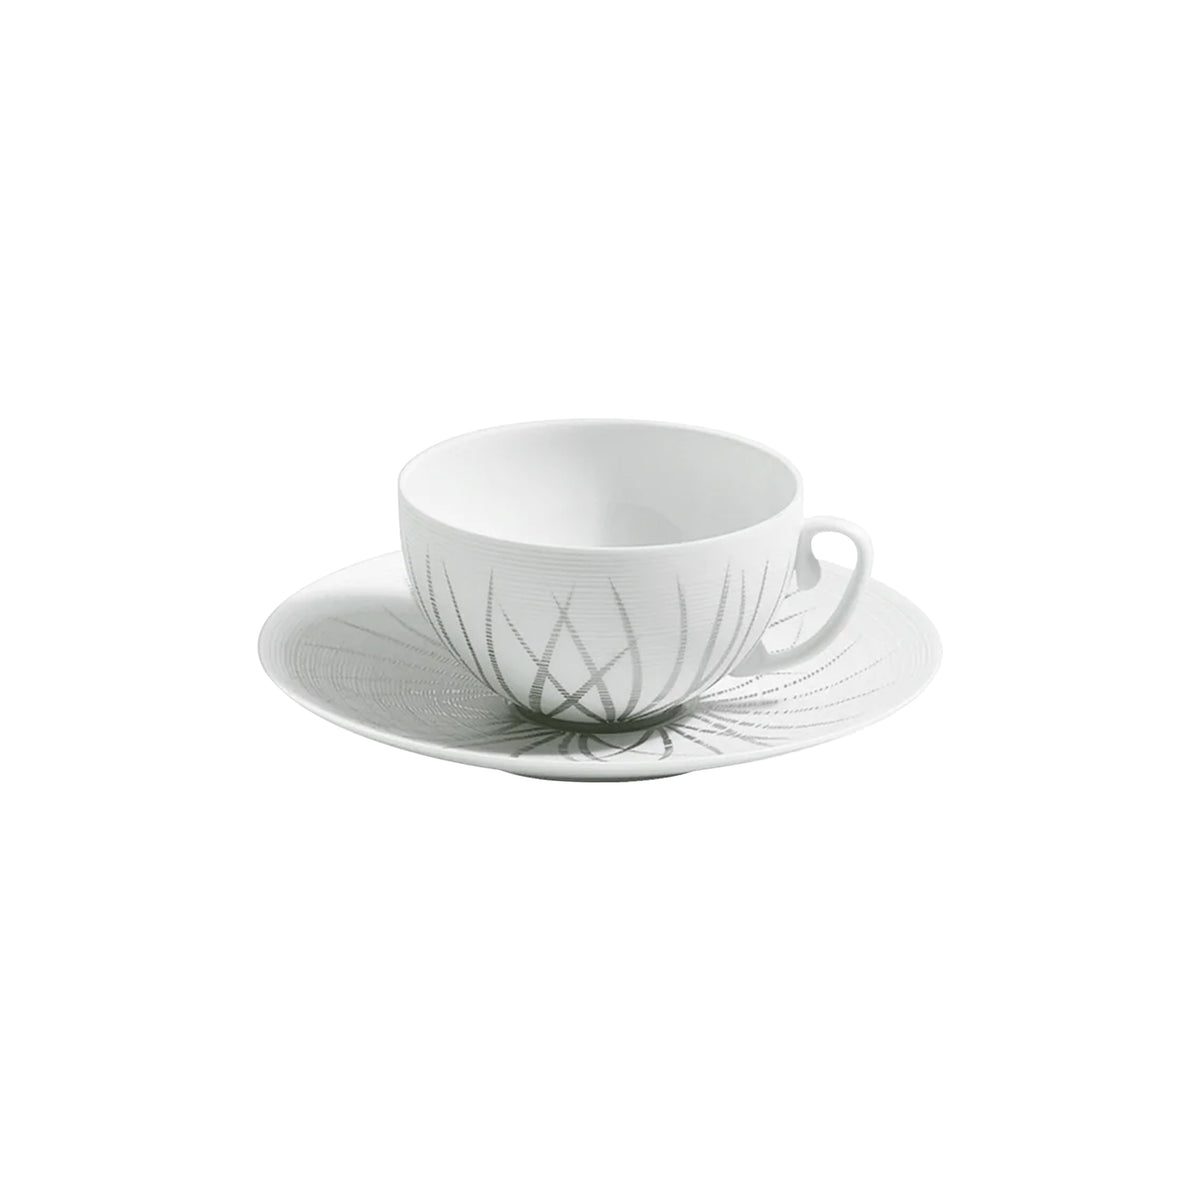 HEMISPHERE Tundra Platinum - Tea set (cup & saucer)